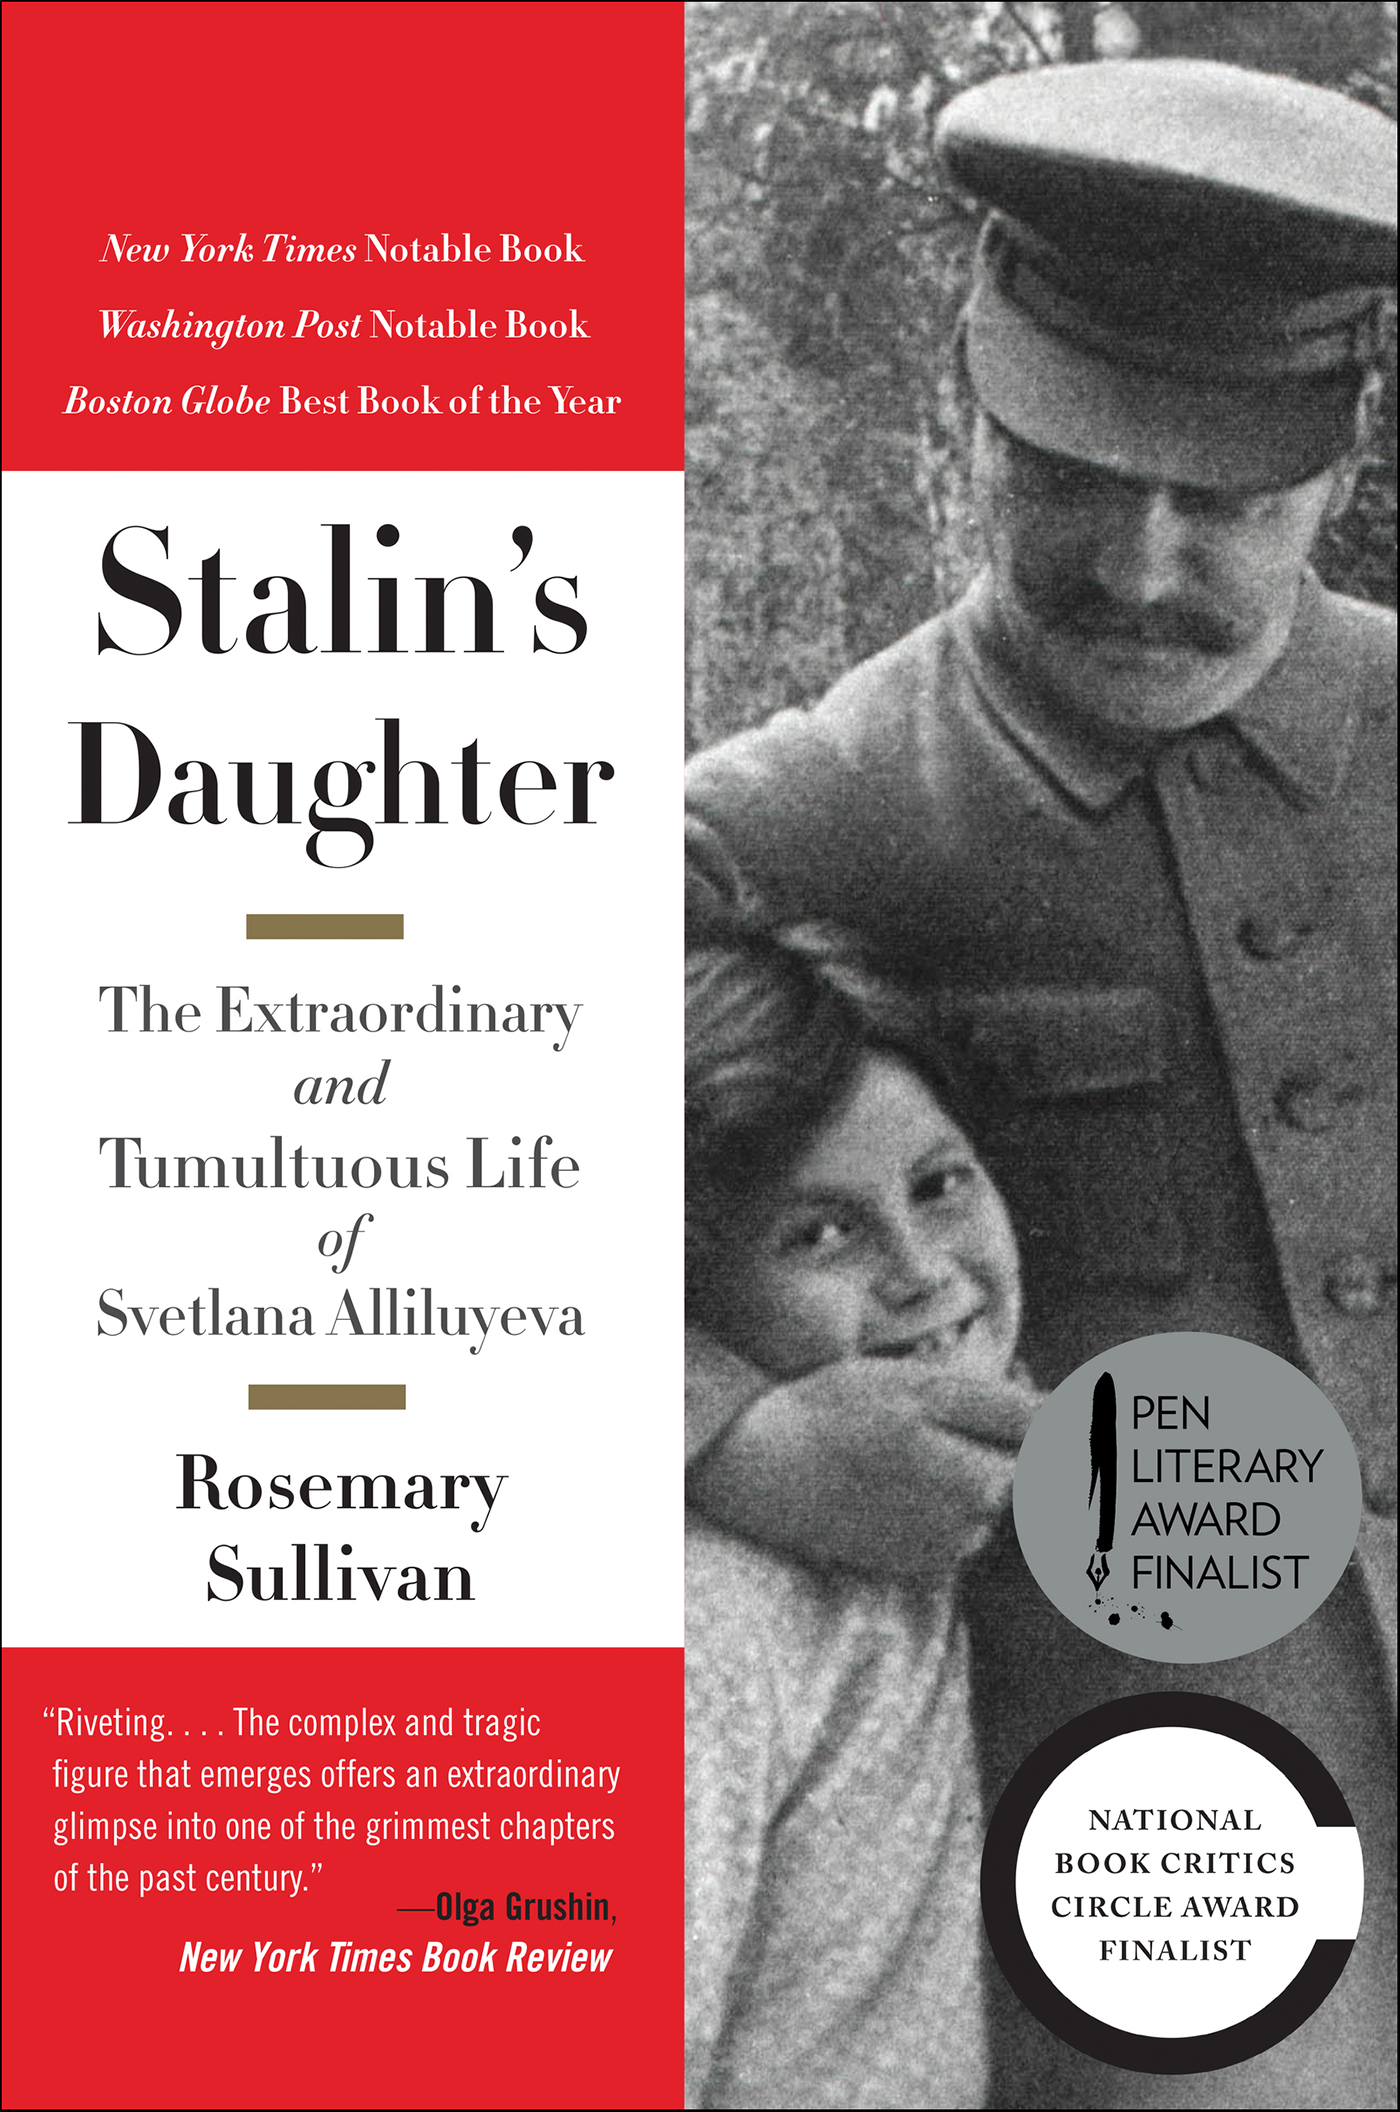 Stalin's daughter the extraordinary and tumultuous life of Svetlana Alliluyeva cover image